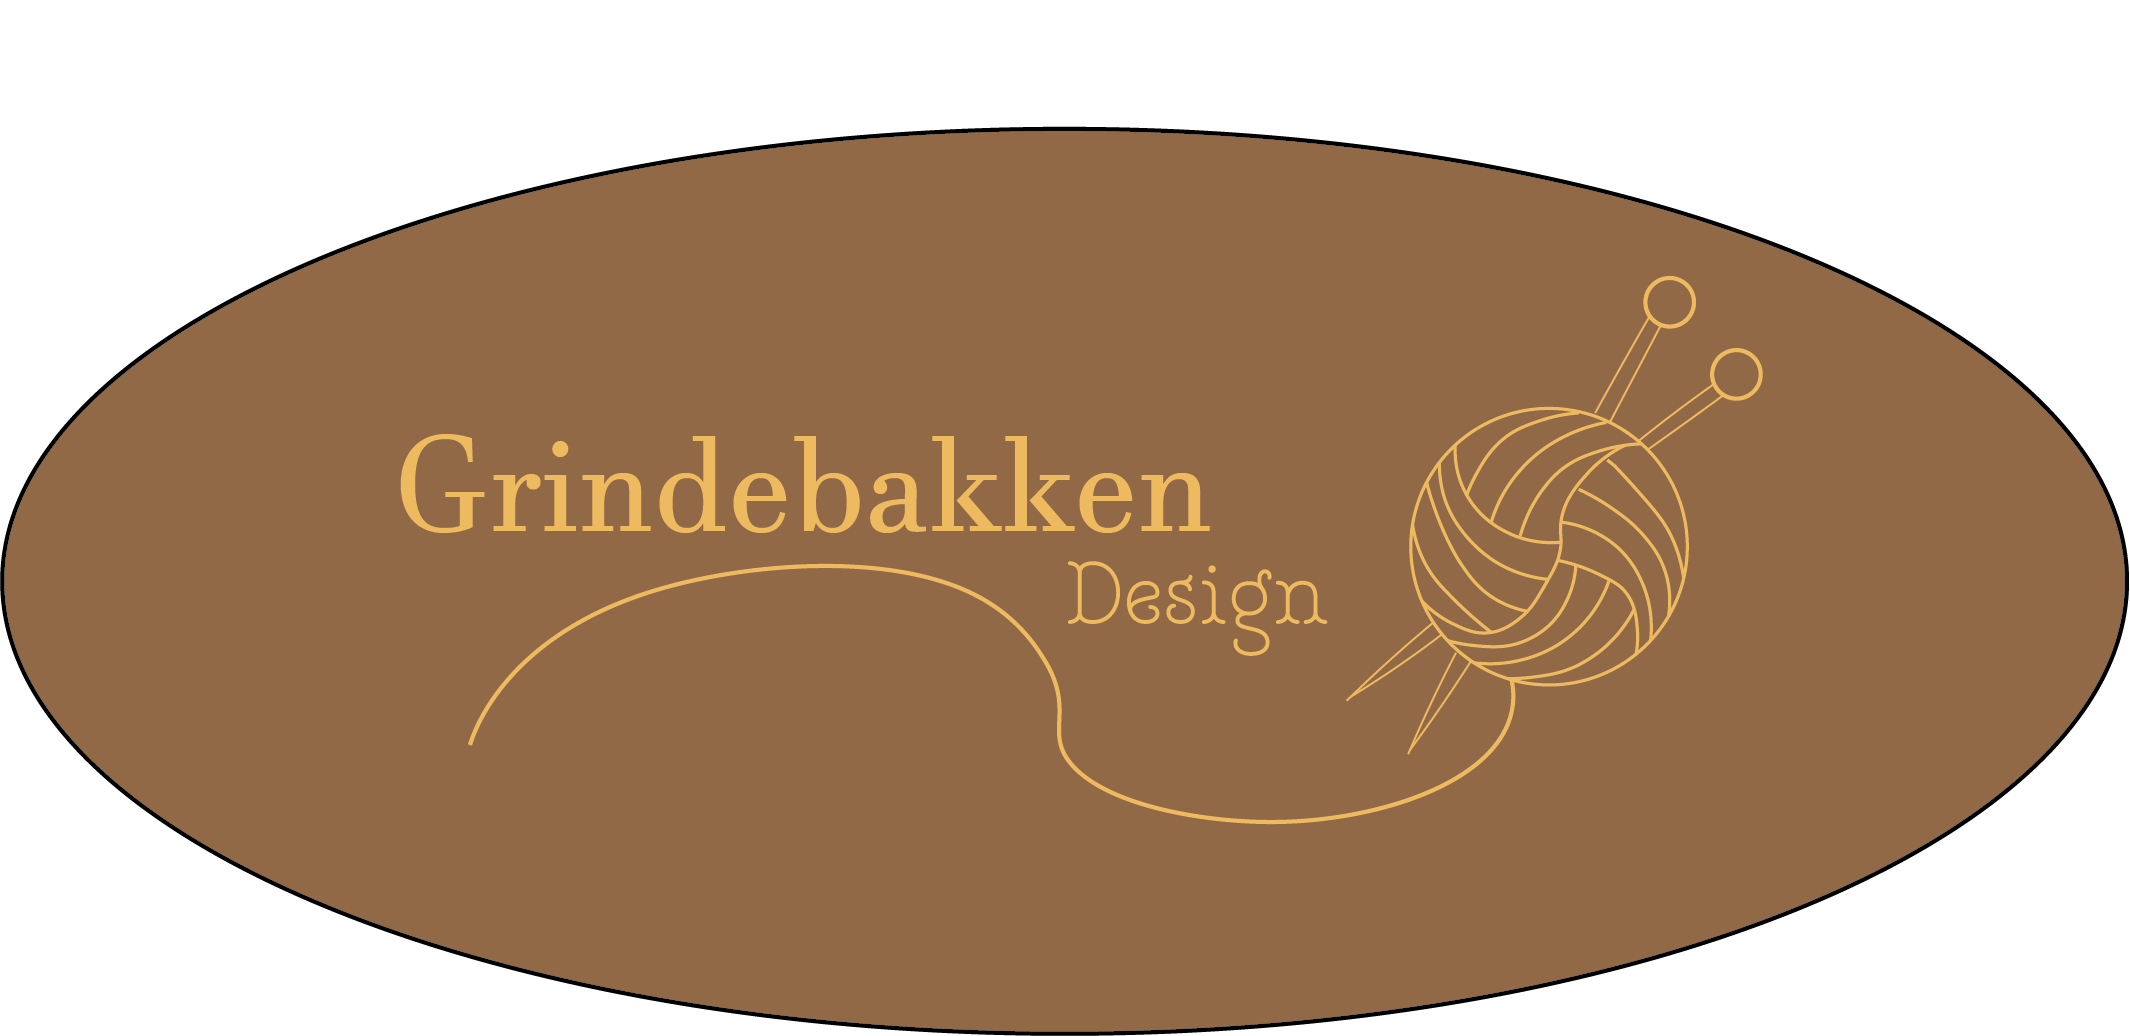 Grindebakken Design